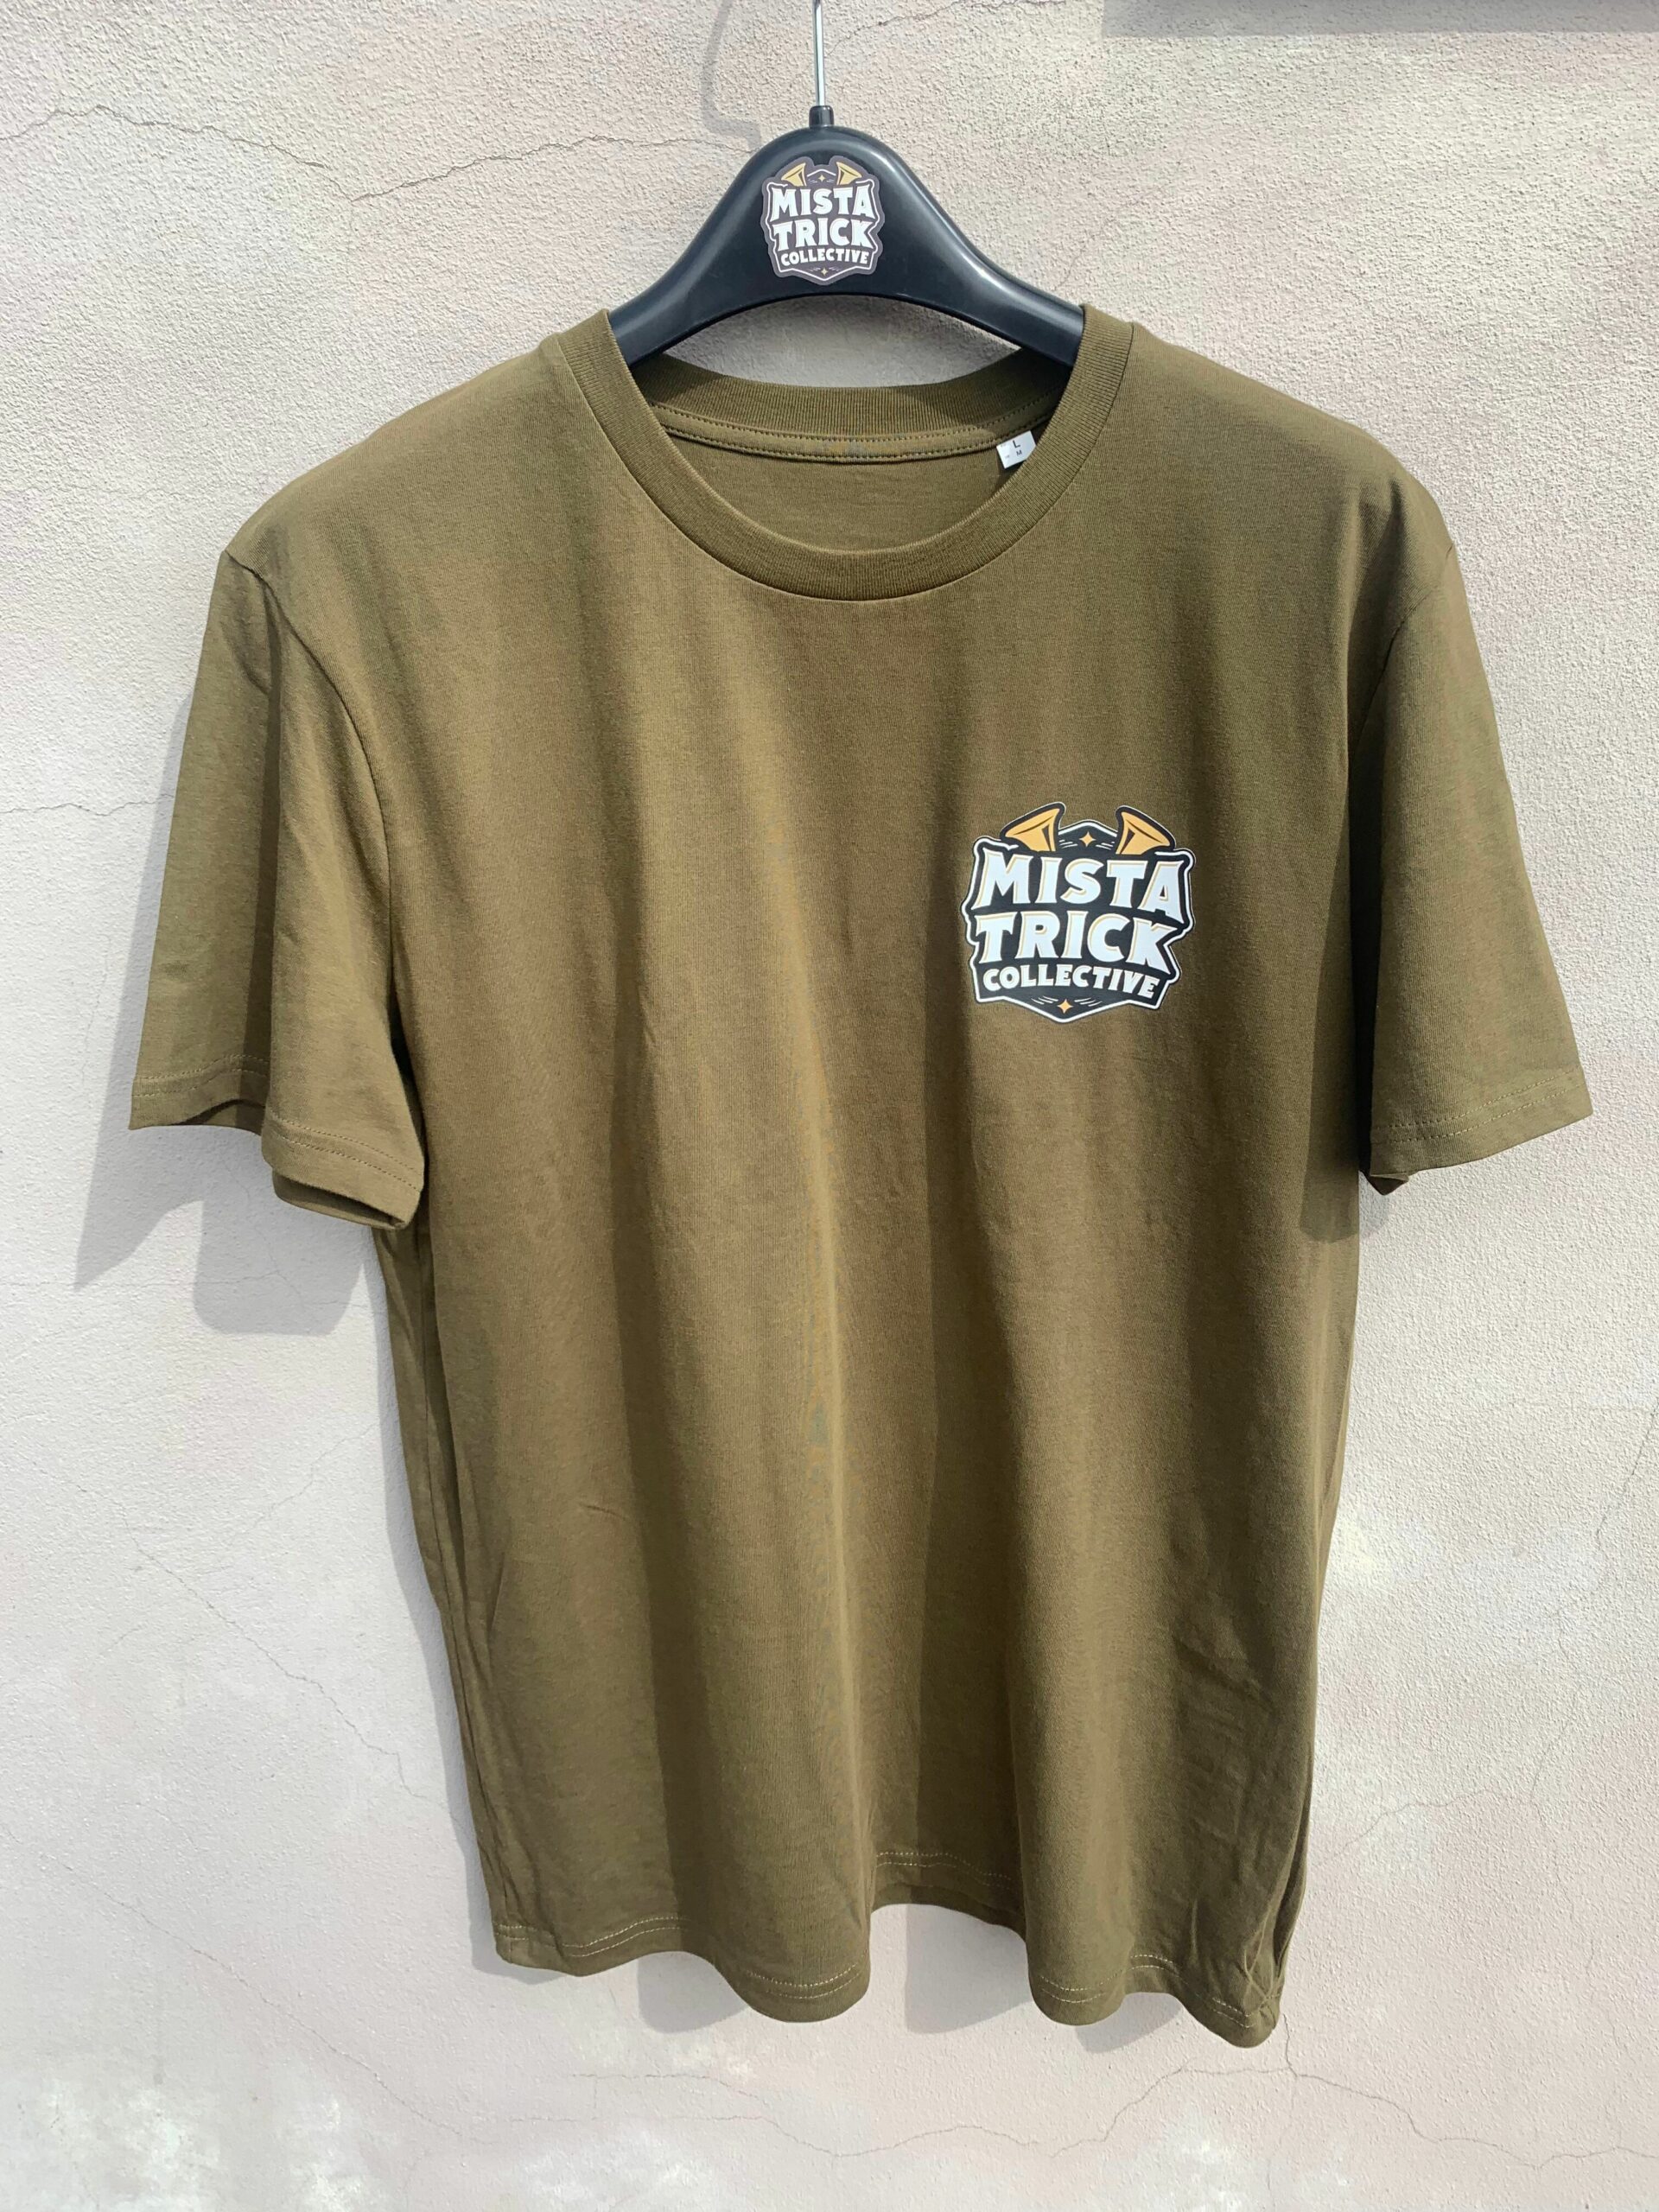 Mista Trick Collective T-Shirt Size: Small (Khaki)